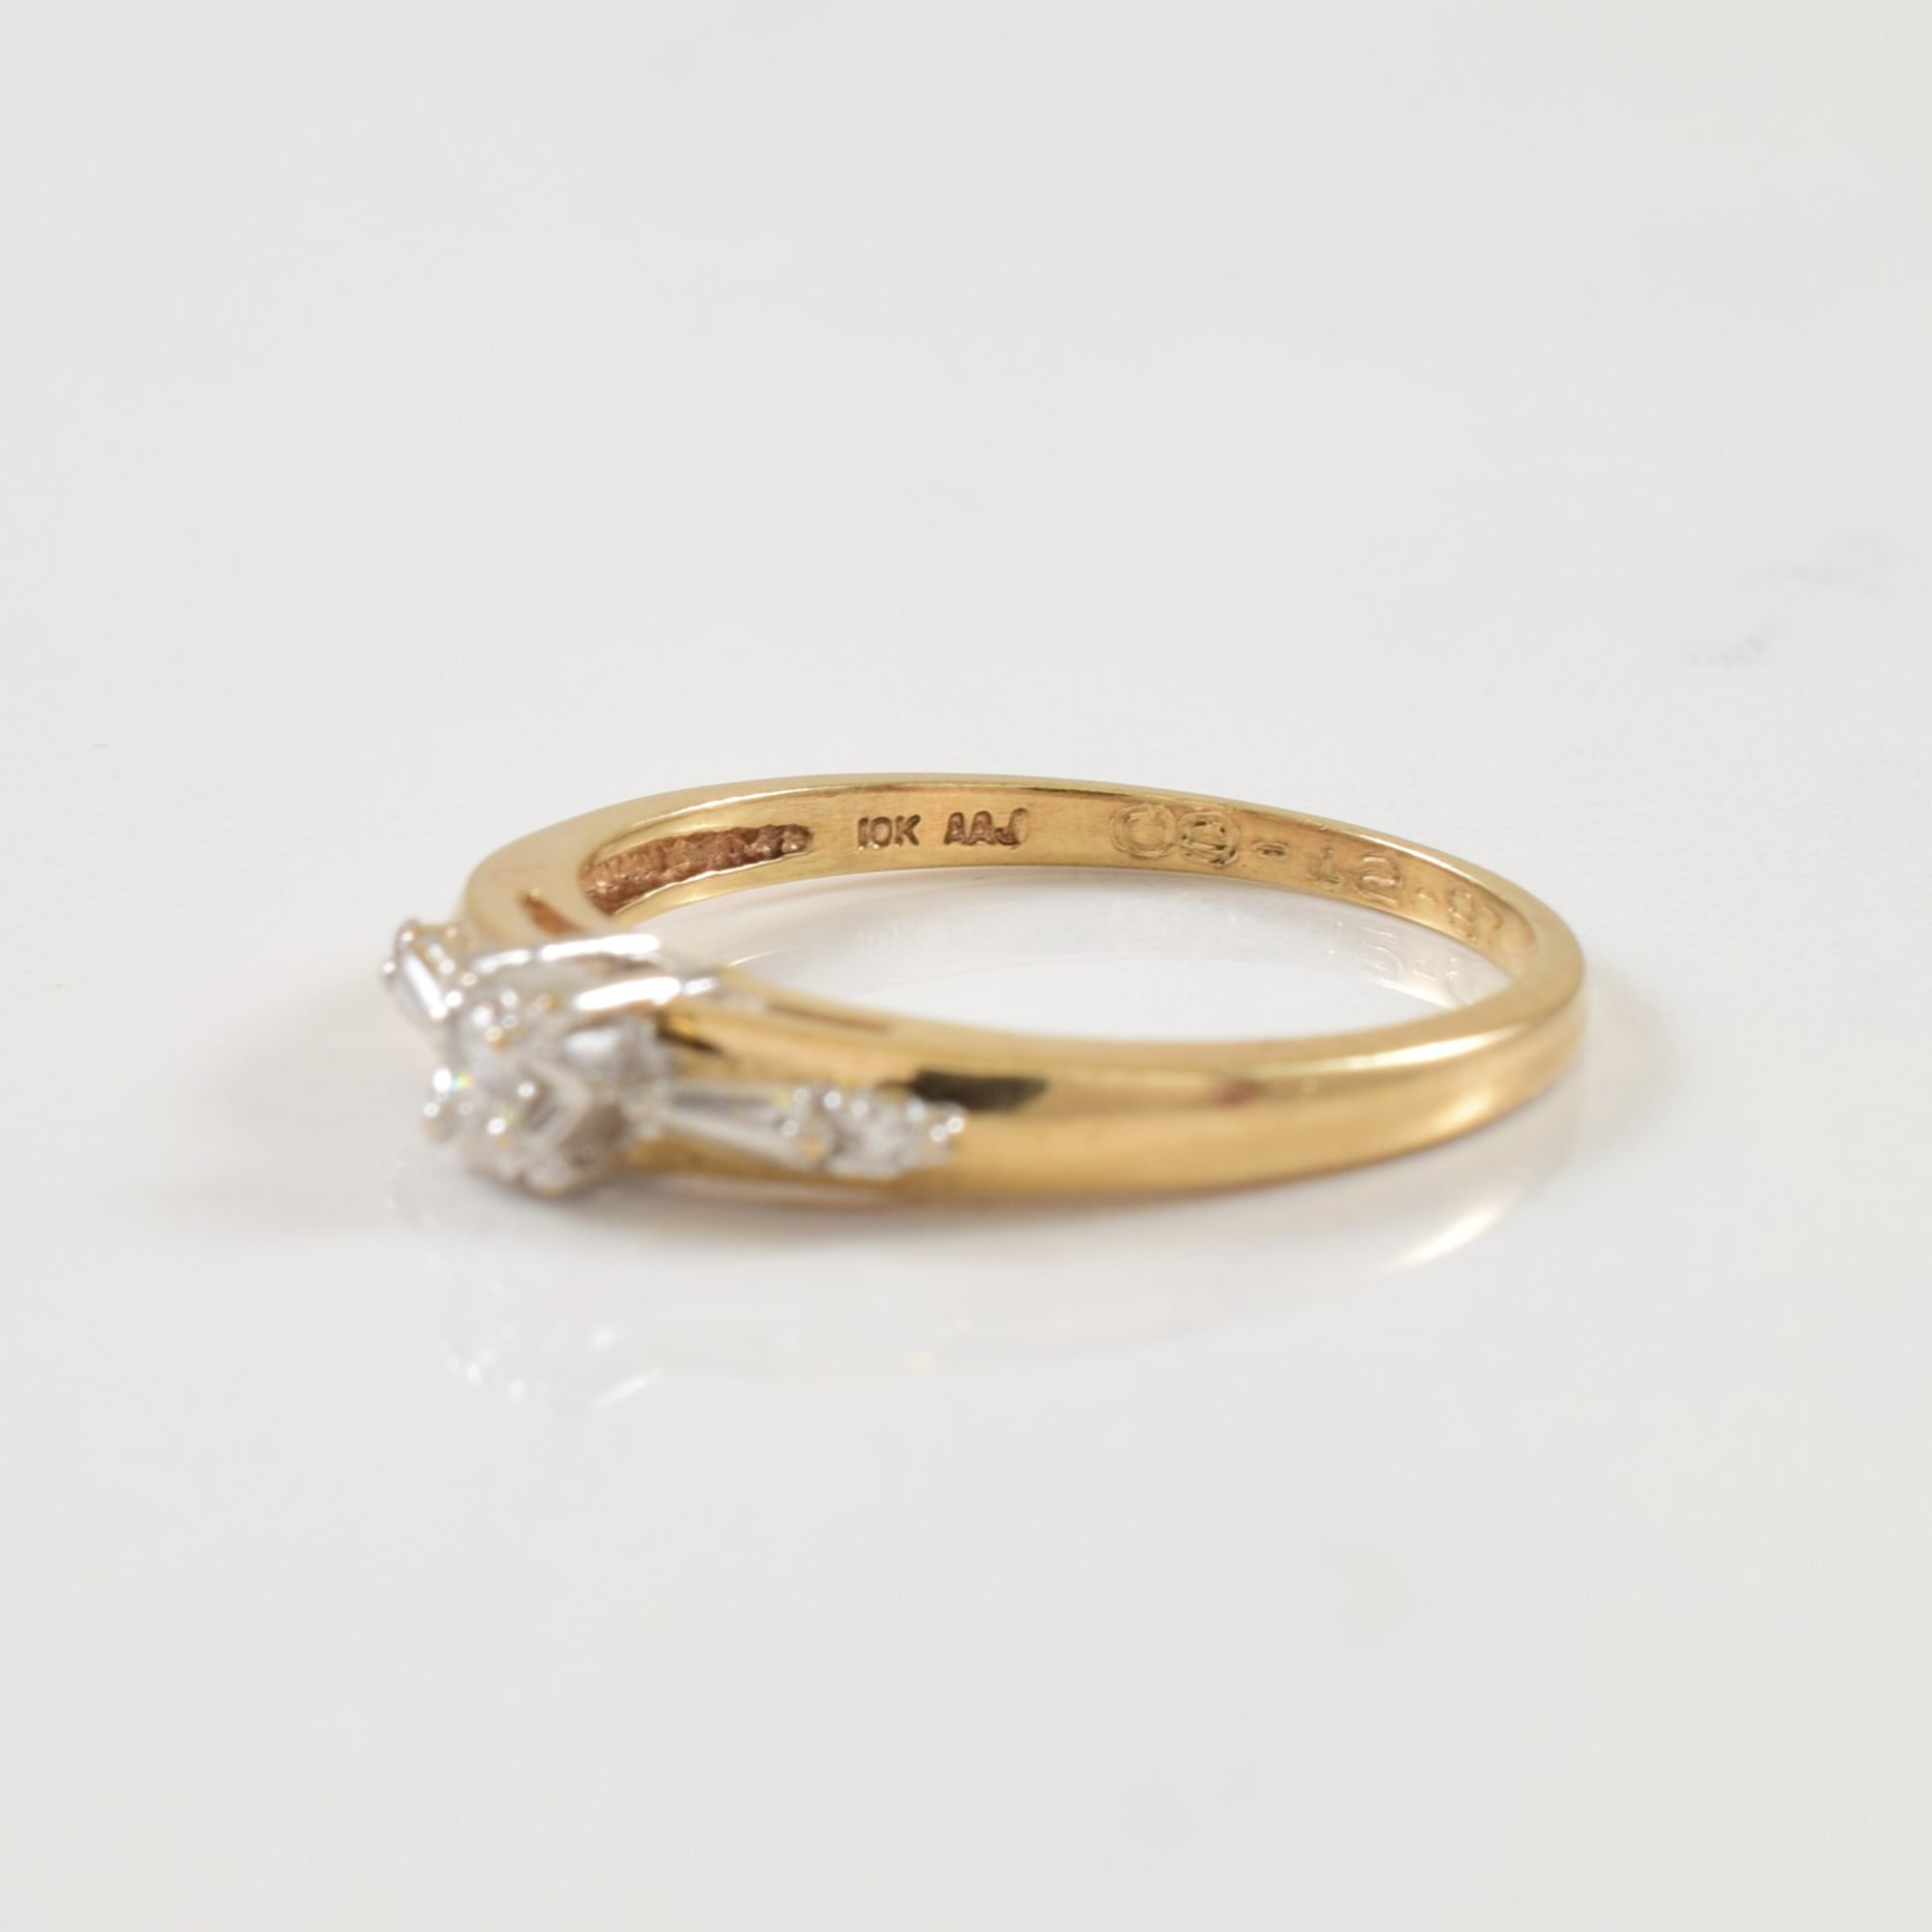 Diamond Cathedral Ring | 0.07ctw | SZ 7.75 |